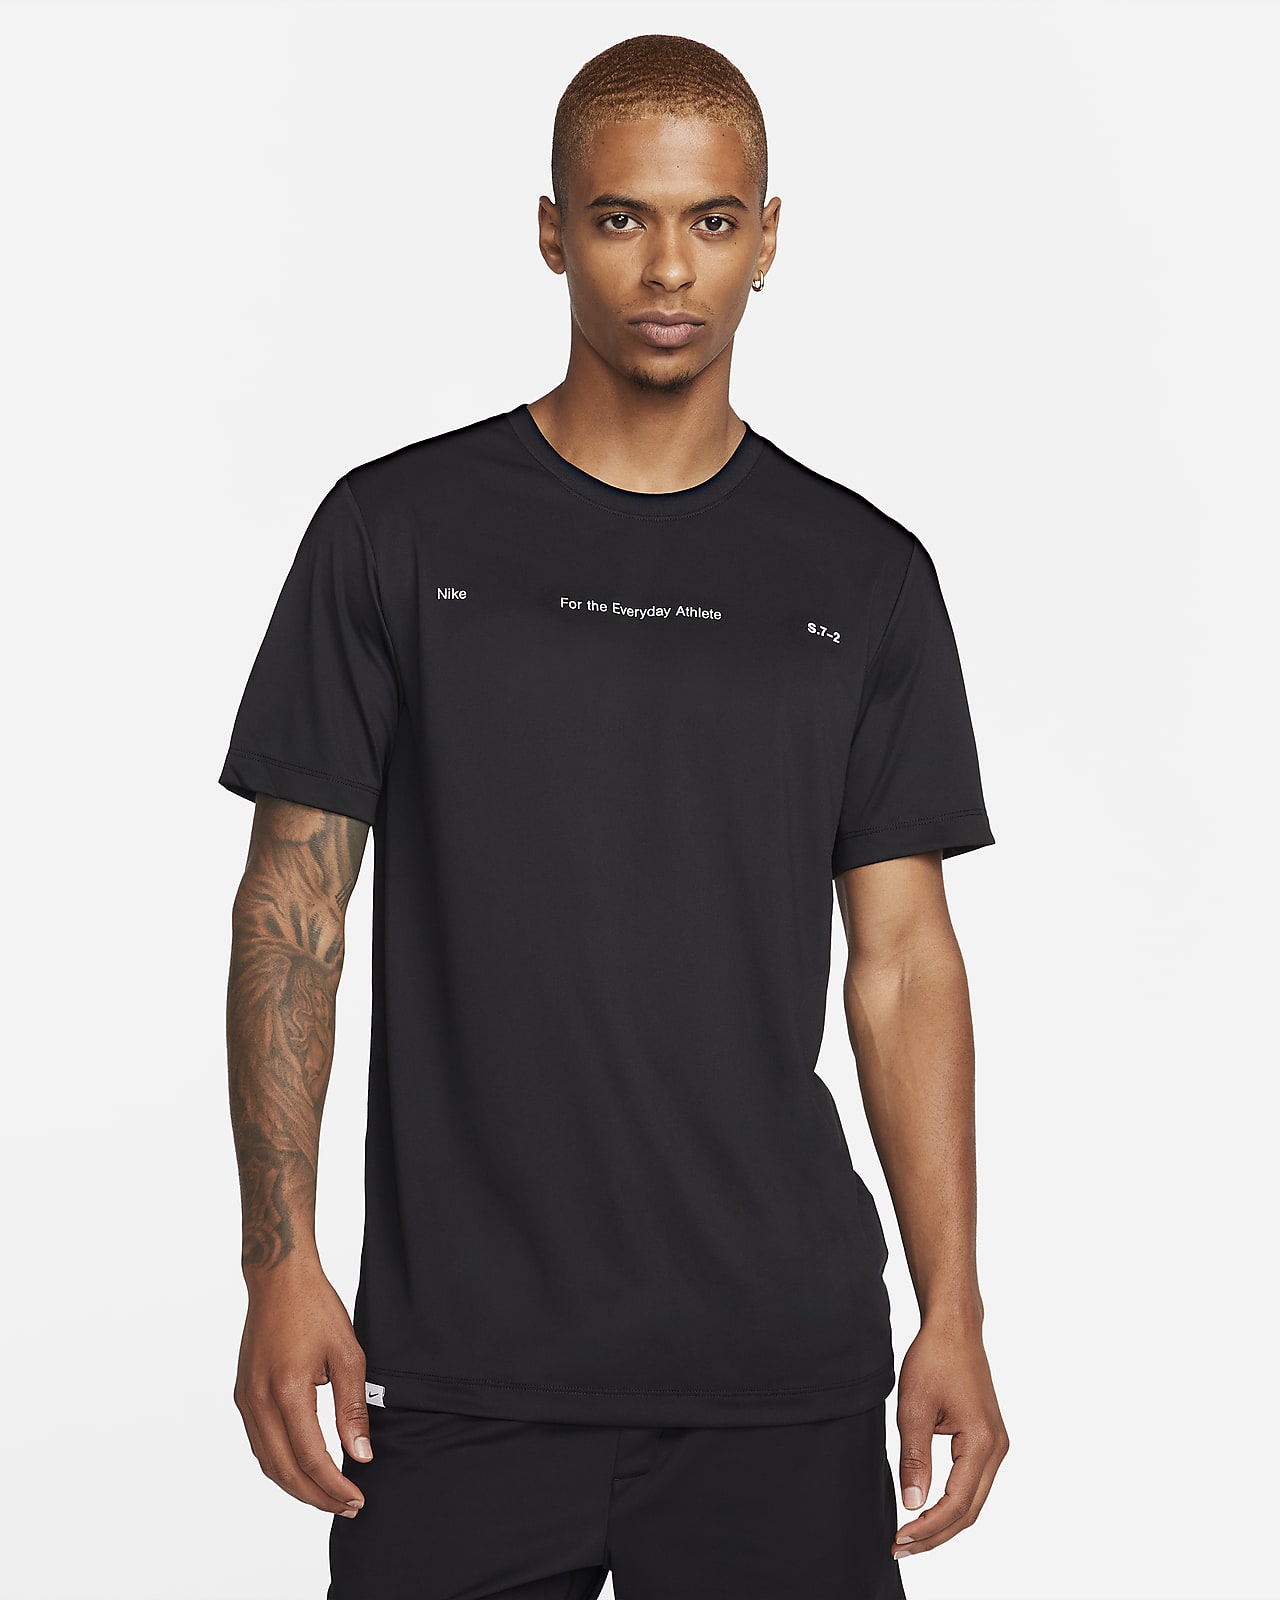 Men's T-Shirts & Tops. Nike NL